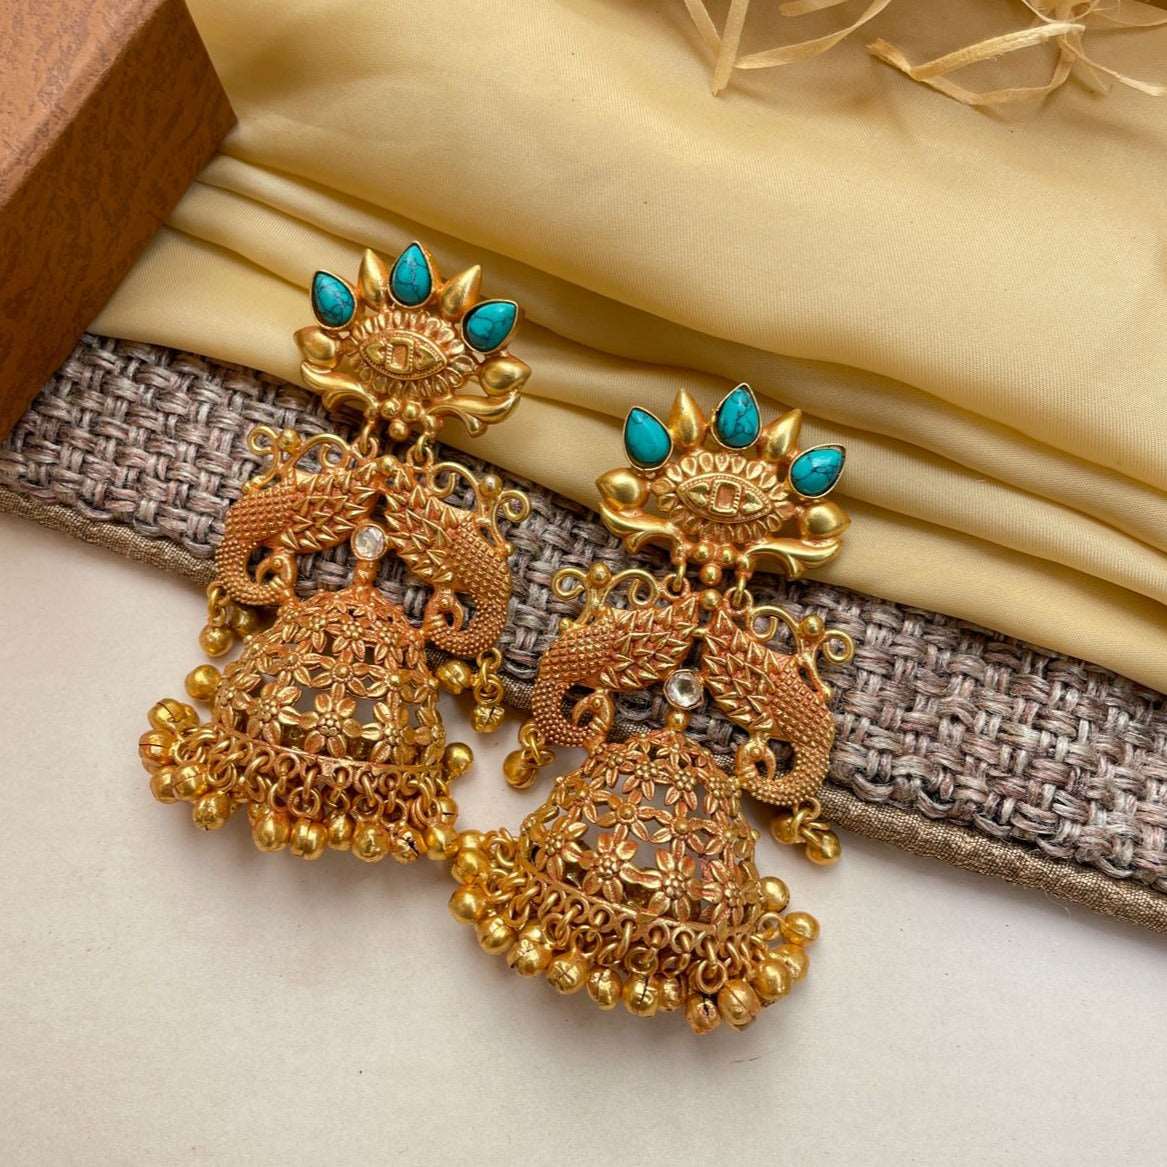 22K Gold Uncut Diamond Jhumkas with Pearls - Dangle Earrings - 235-DER466  in 28.550 Grams